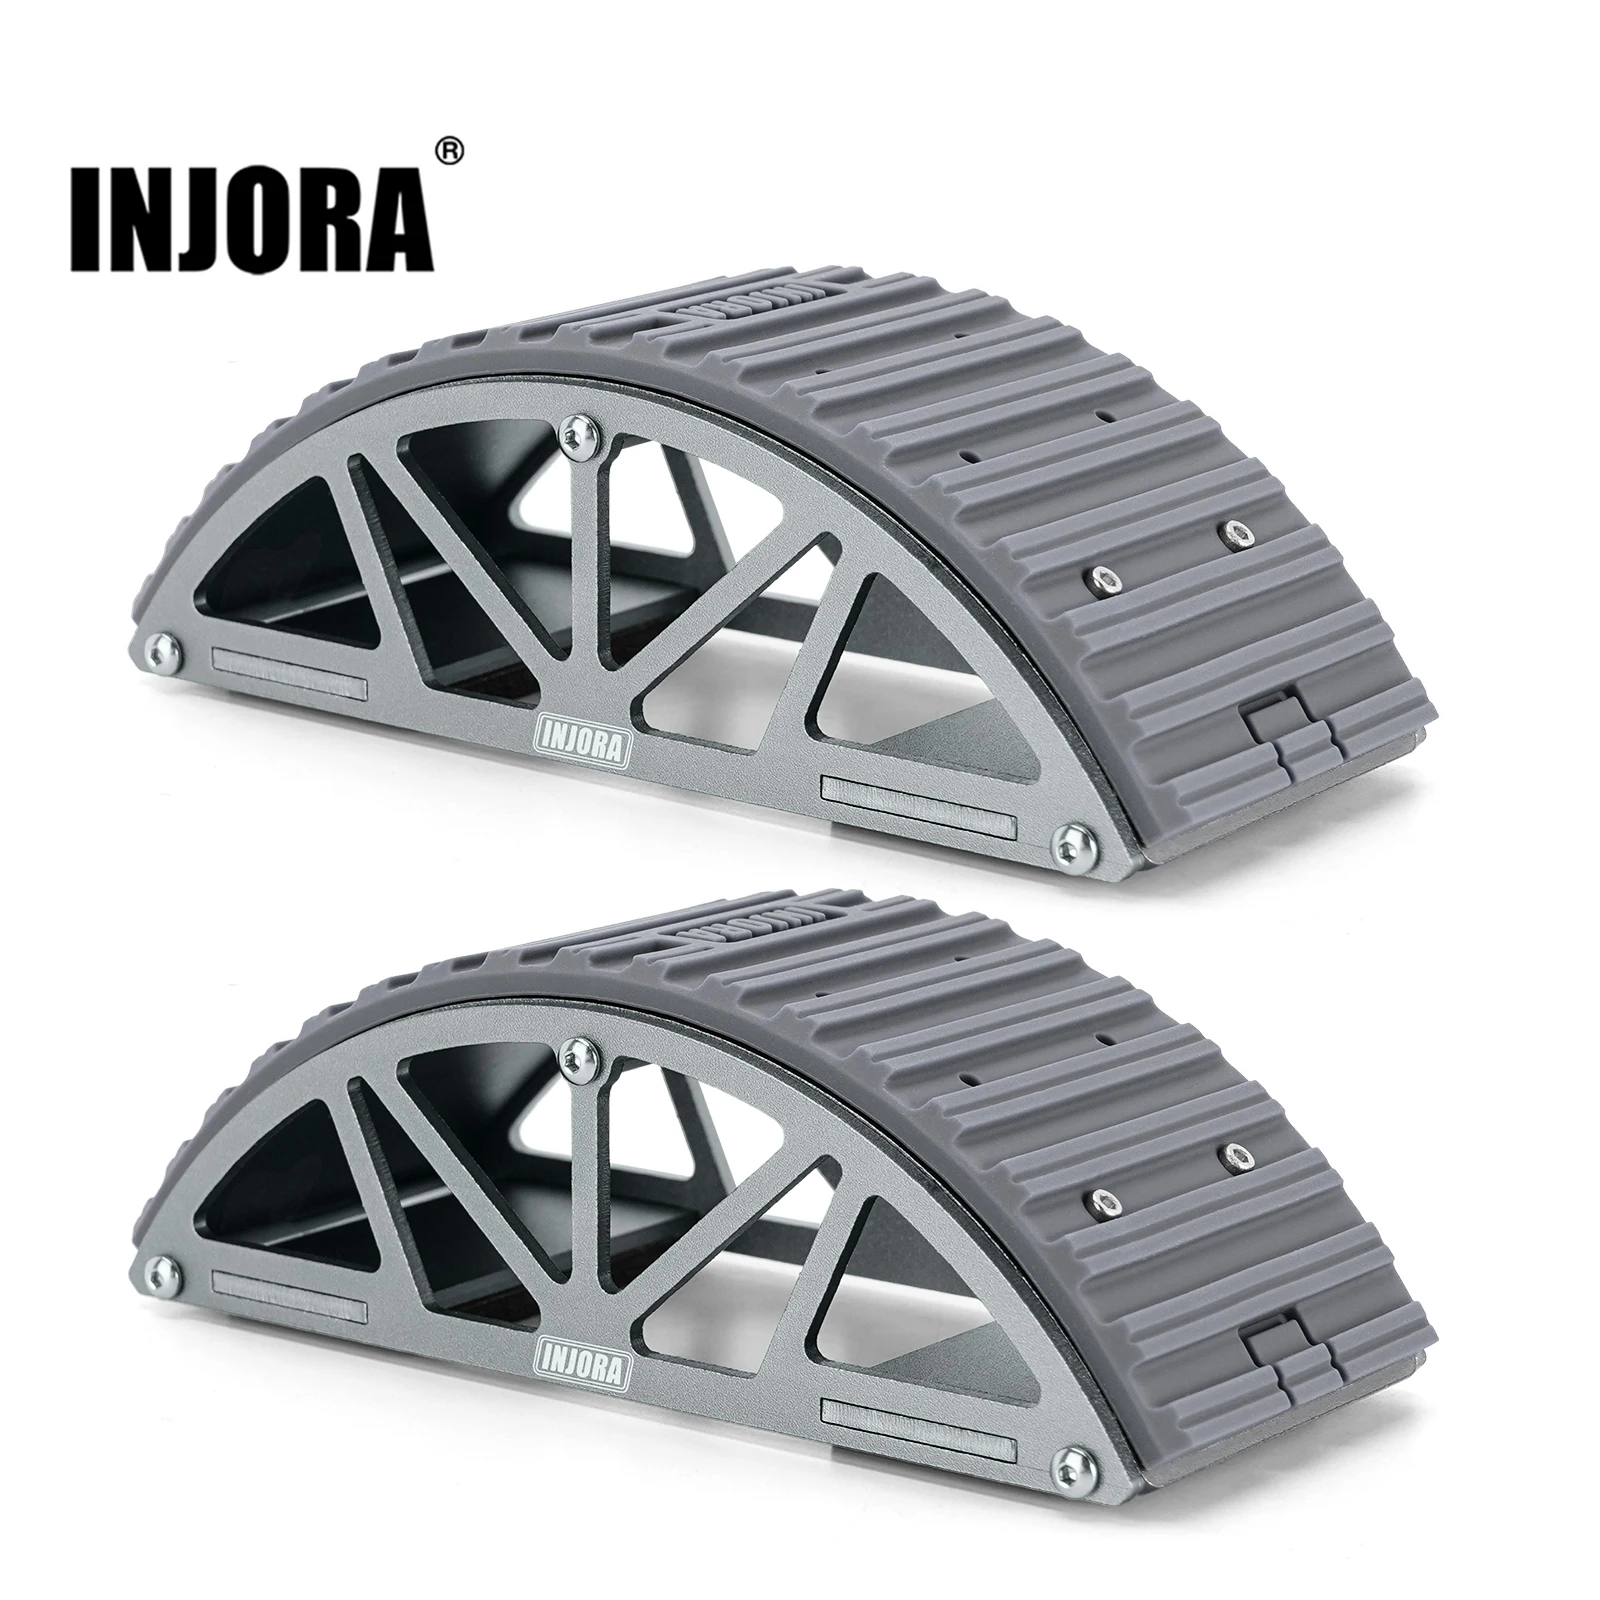 INJORA-2PCS-Mini-Vehicle-Display-Ramp-for-1-24-1-18-RC-Crawler-Car-SCX24-AX24.webp